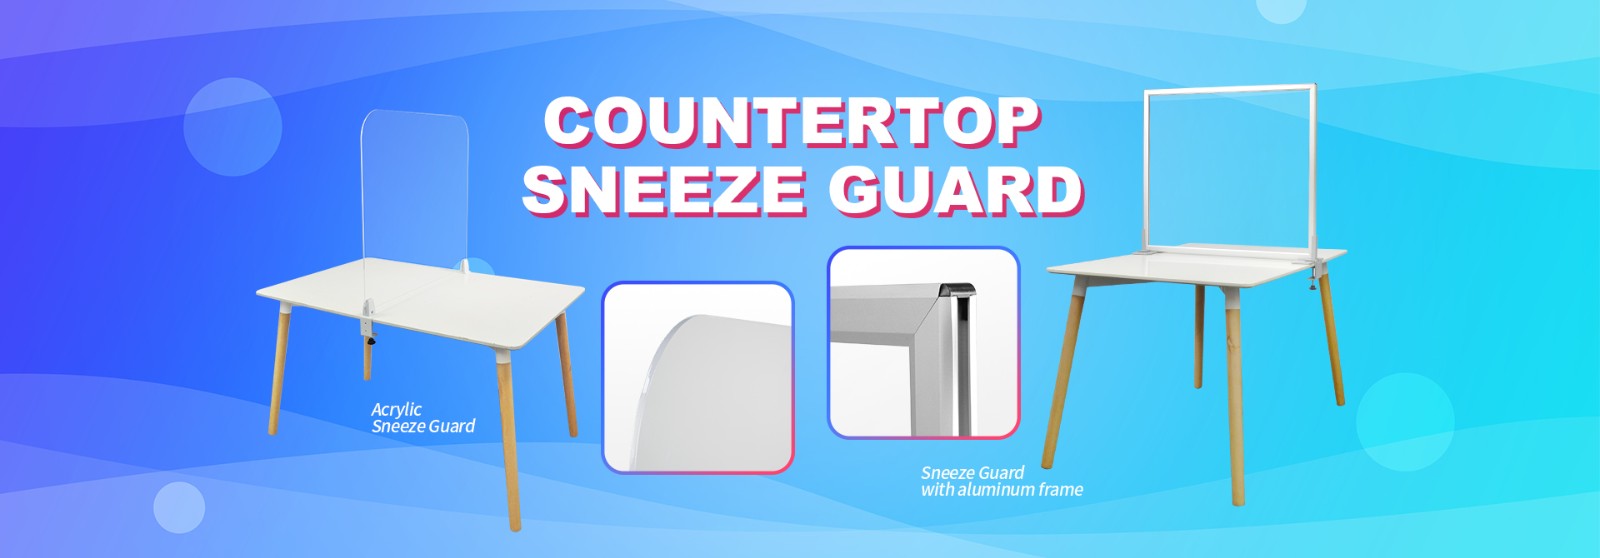 Social Distancing Sneeze Guard